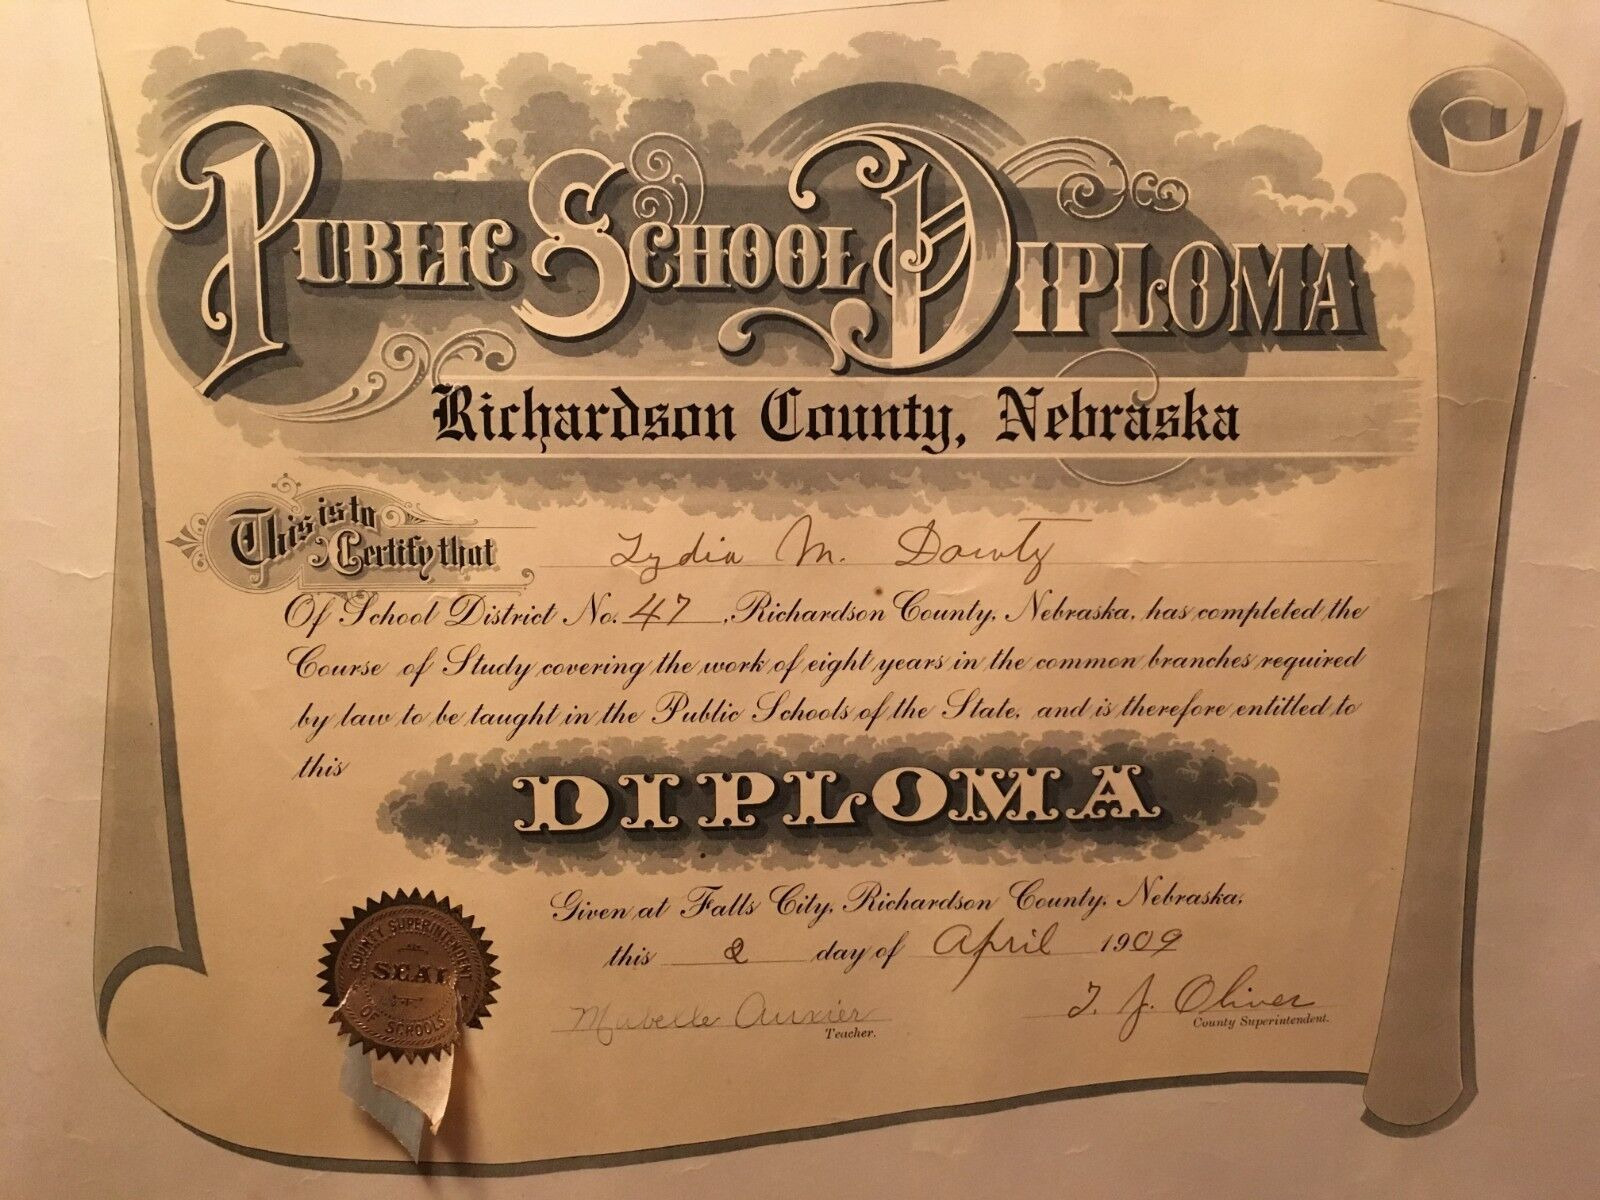 Vintage 8th Grade Diploma, Nebraska 1909